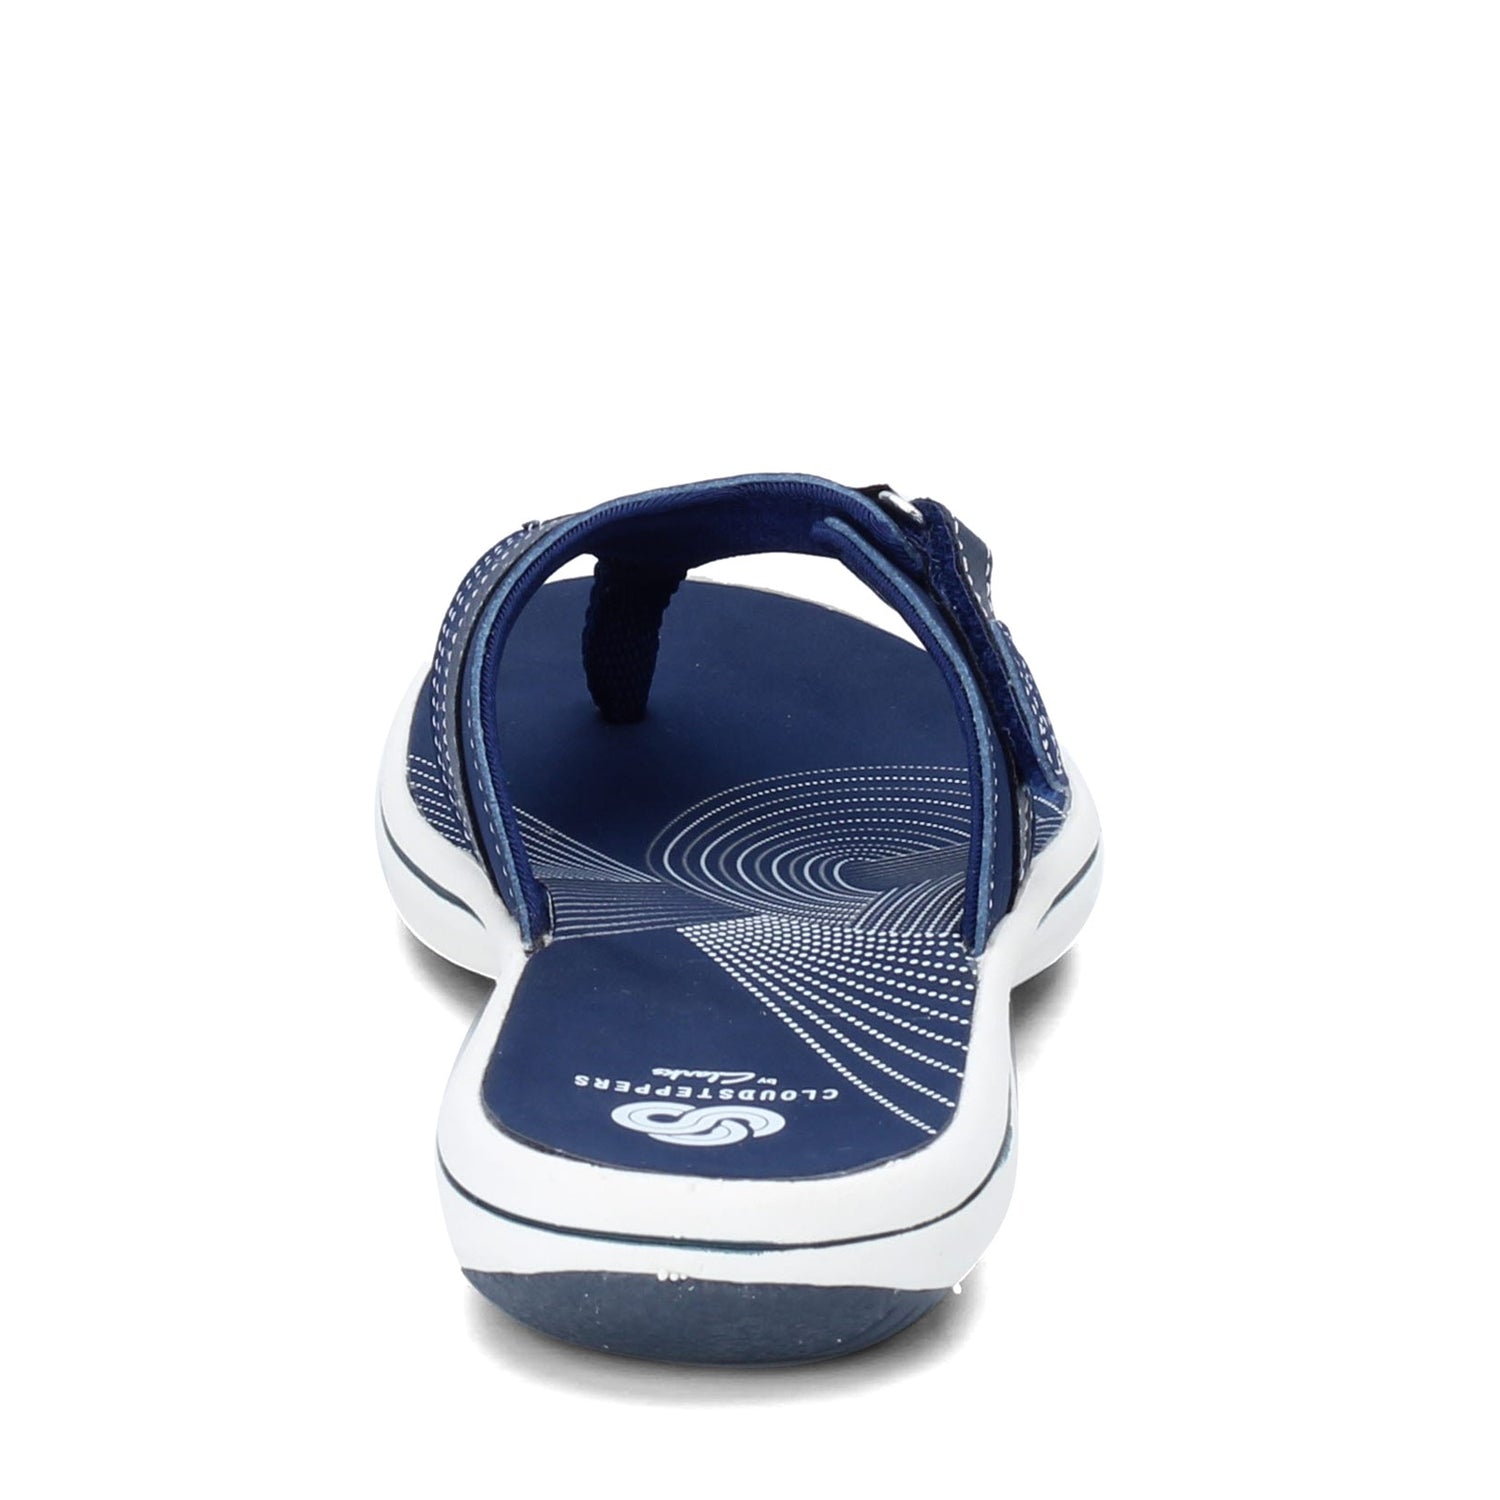 Peltz Shoes  Women's Clarks Breeze Sea Sandal NAVY 26125506